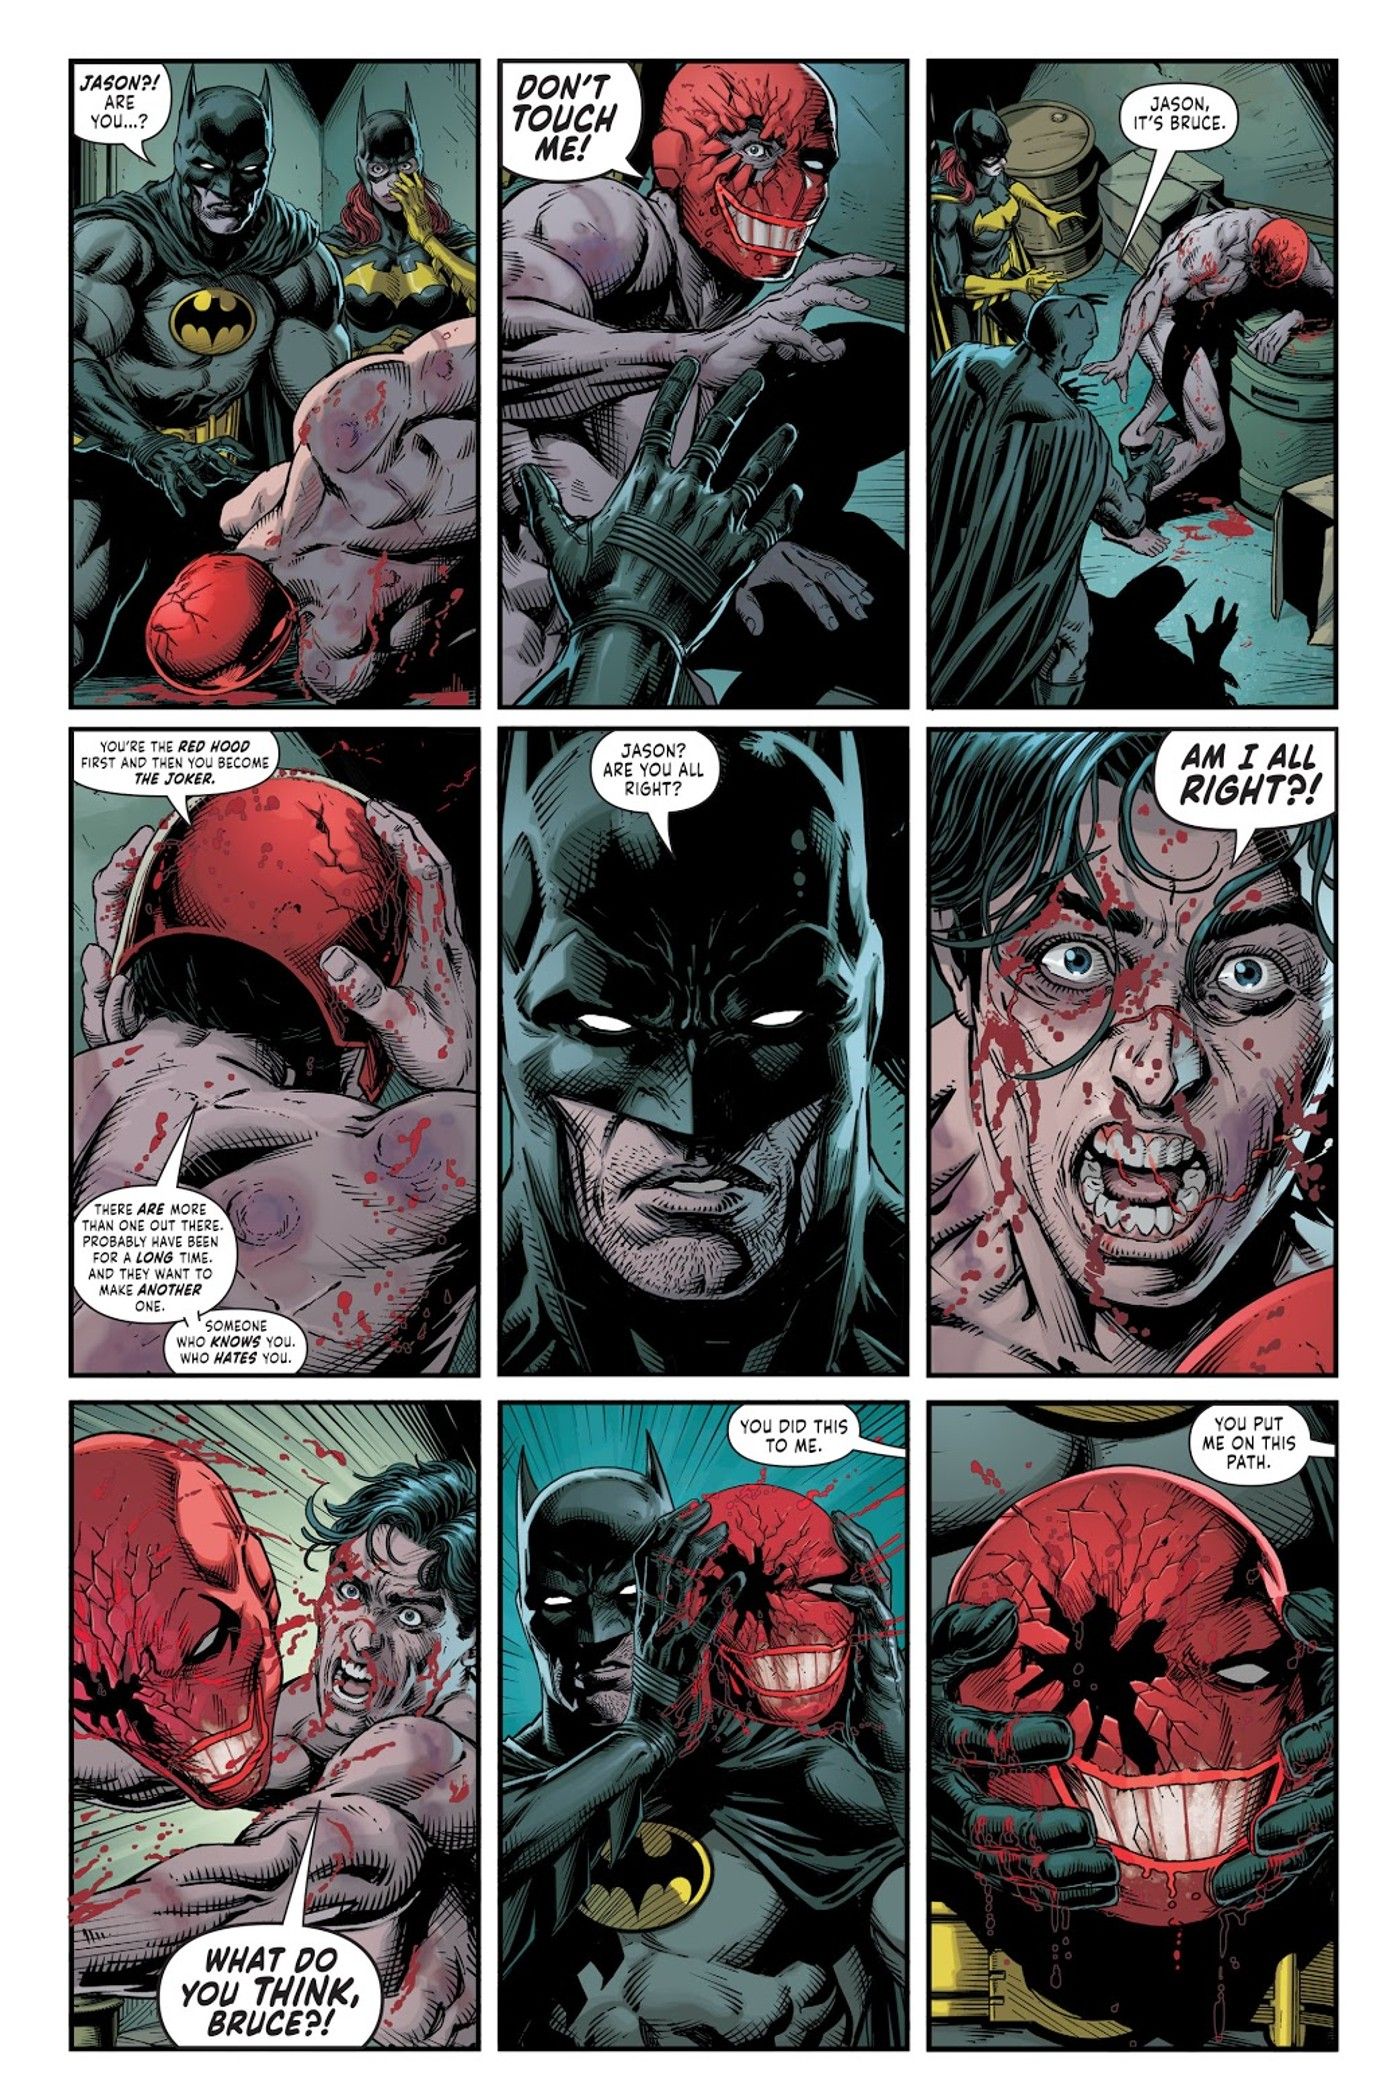 Batman and Batgirl find Jason Todd Red Hood in Three Jokers 2